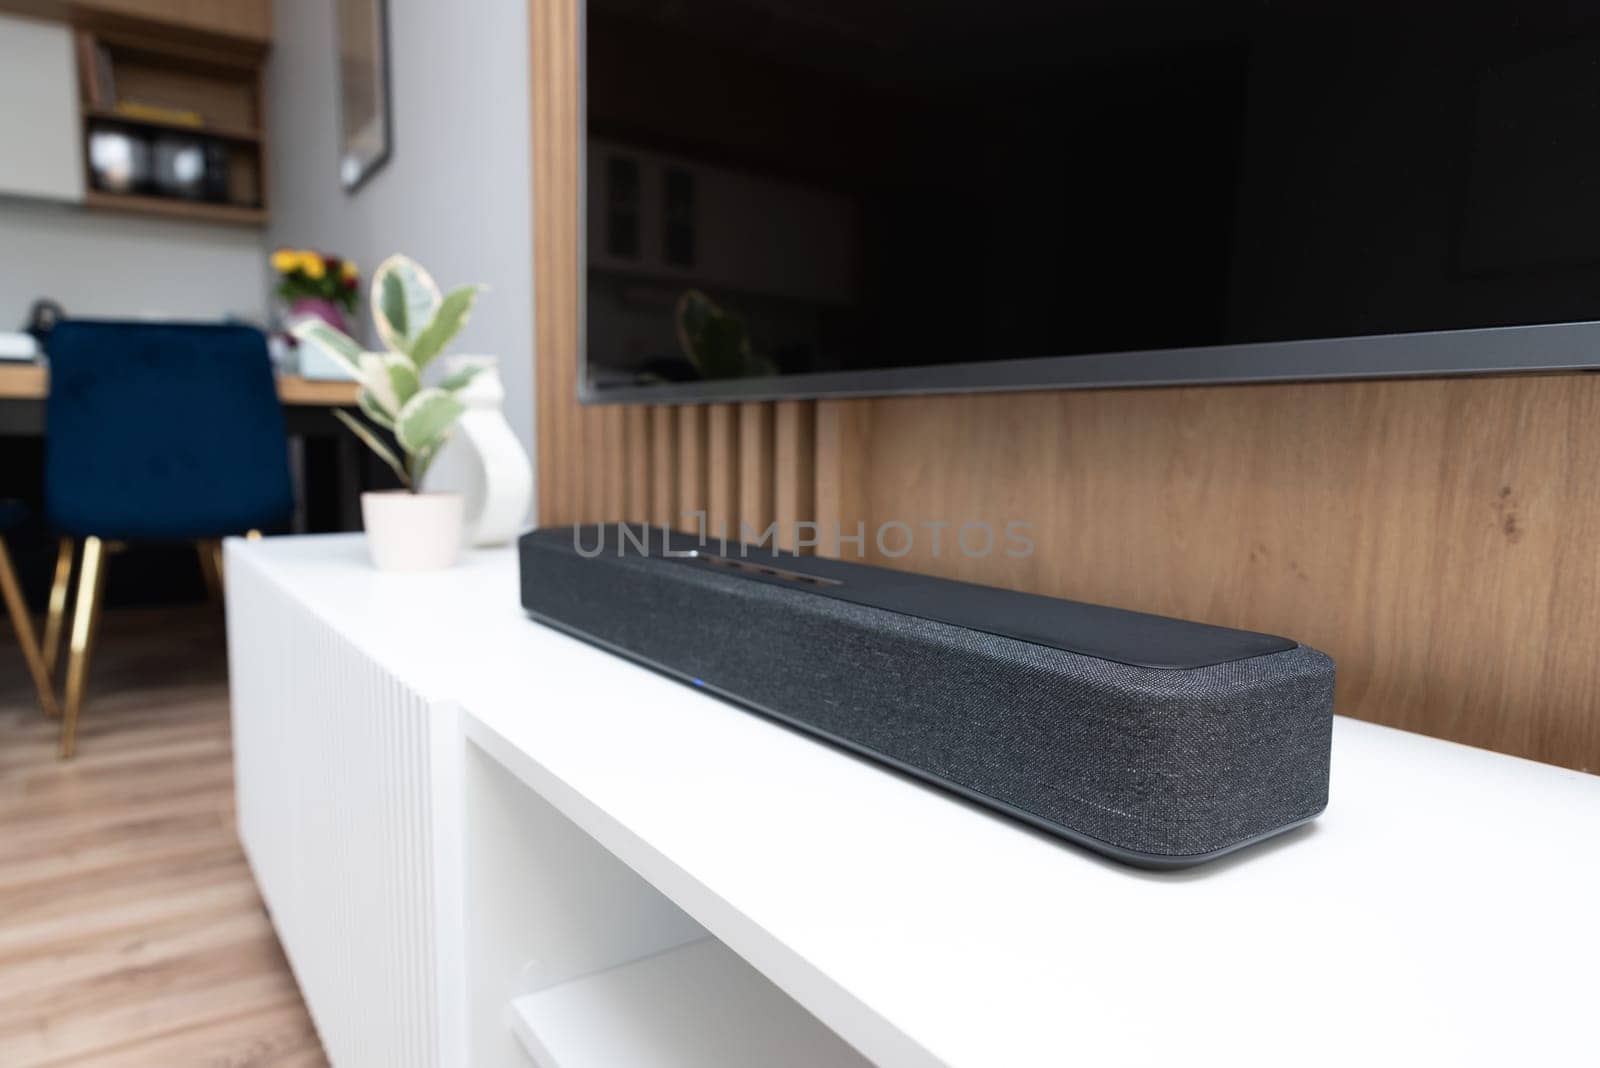 Soundbar in a modern home by simpson33